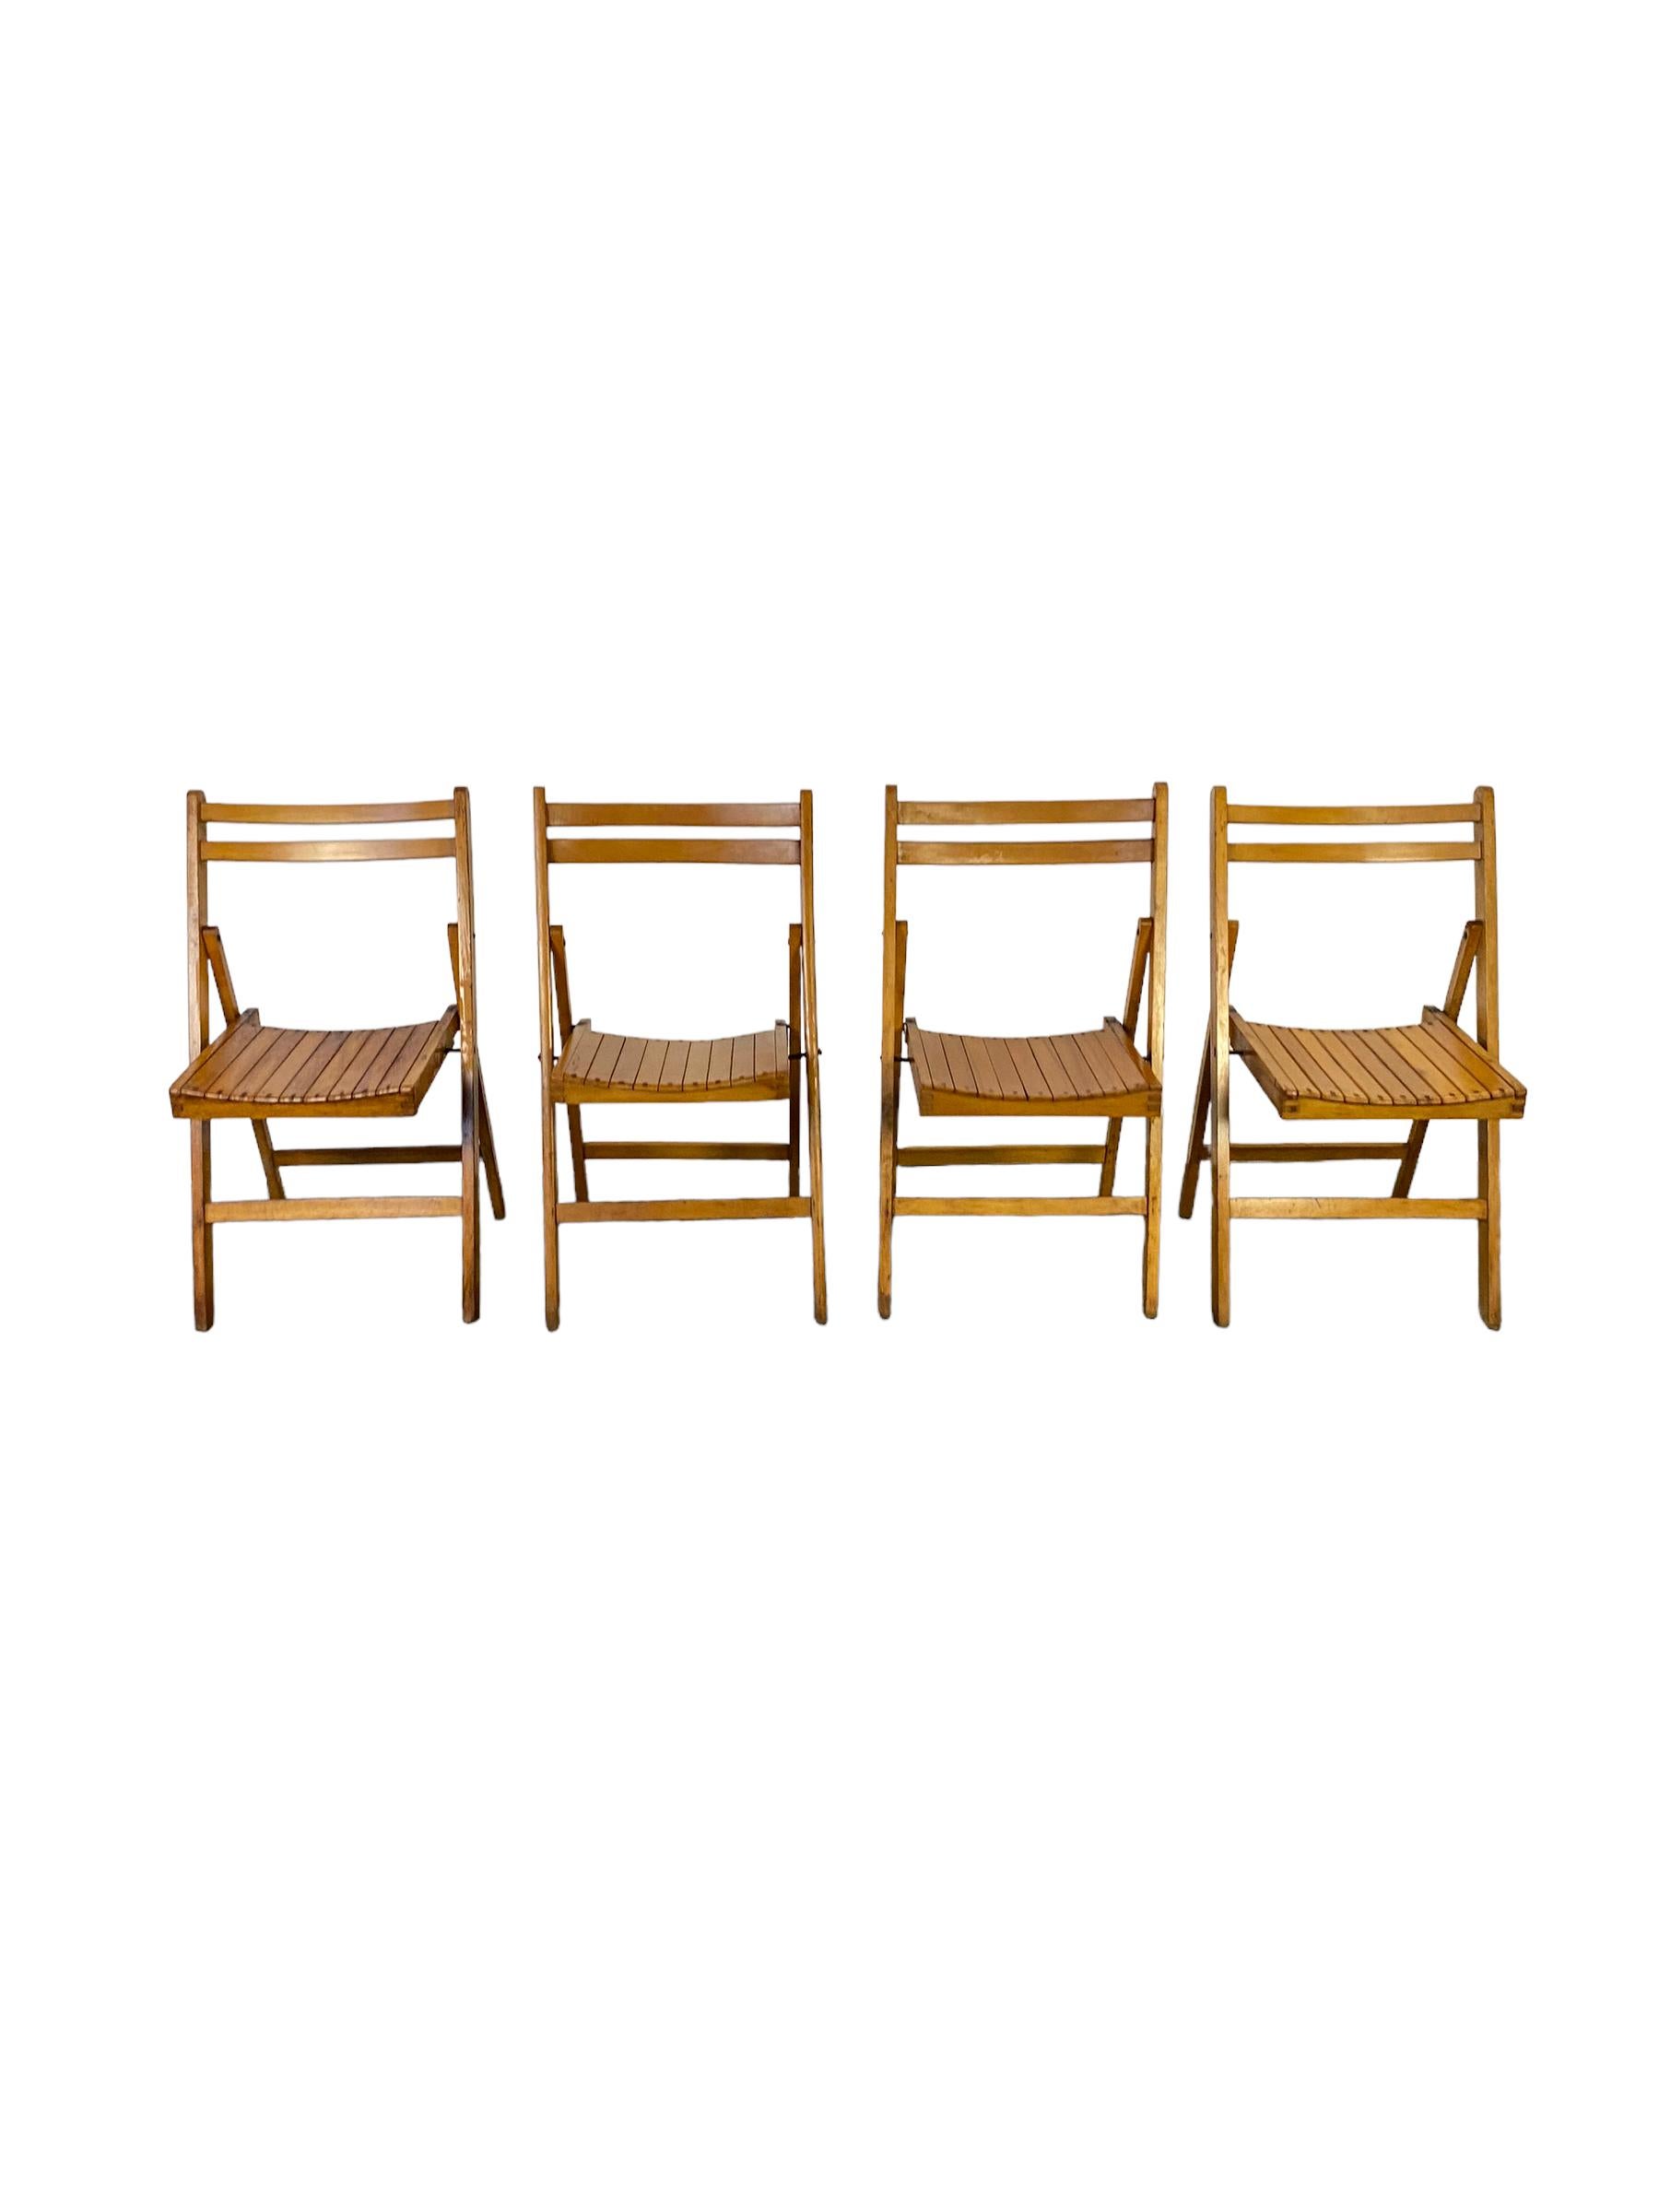 20th Century Slatted Seat Wood Folding Chairs Set